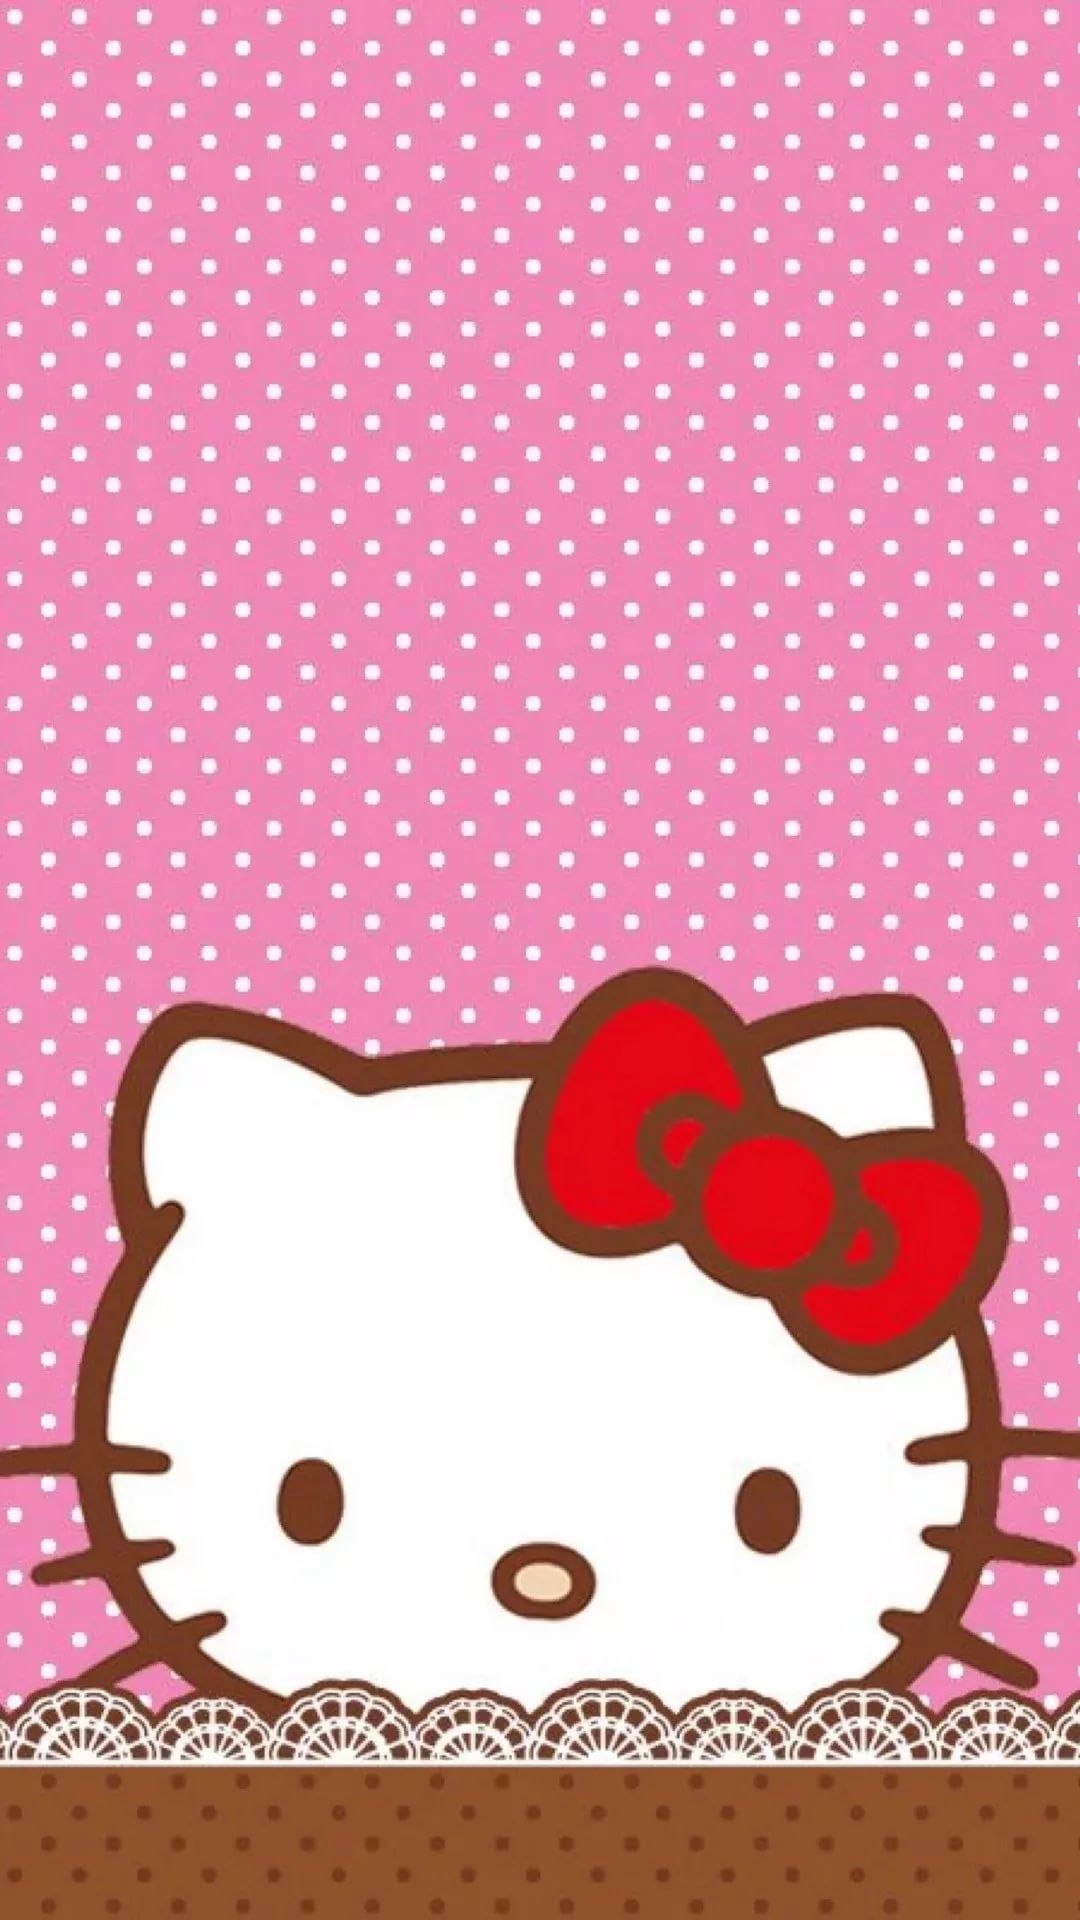 Cute Hello Kitty Cell Phone iPhone hd wallpaper